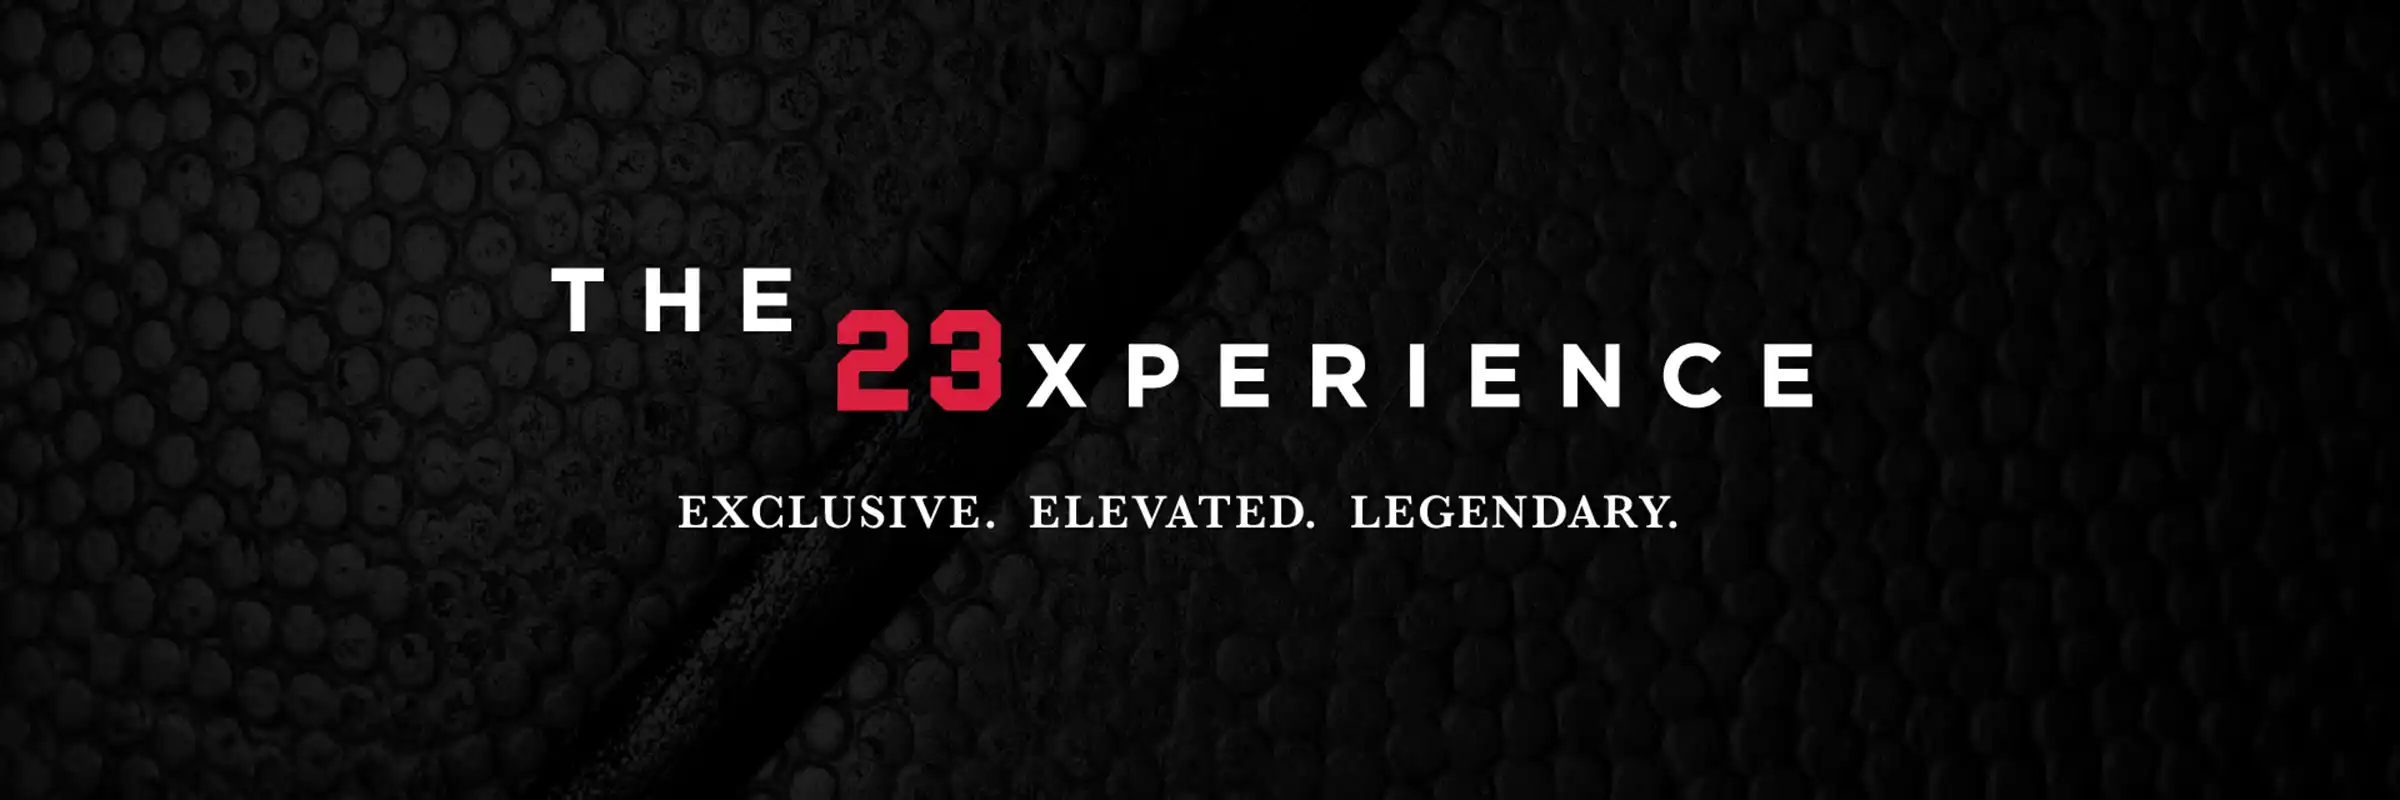 The 23 Experience Header Image - Desktop Version